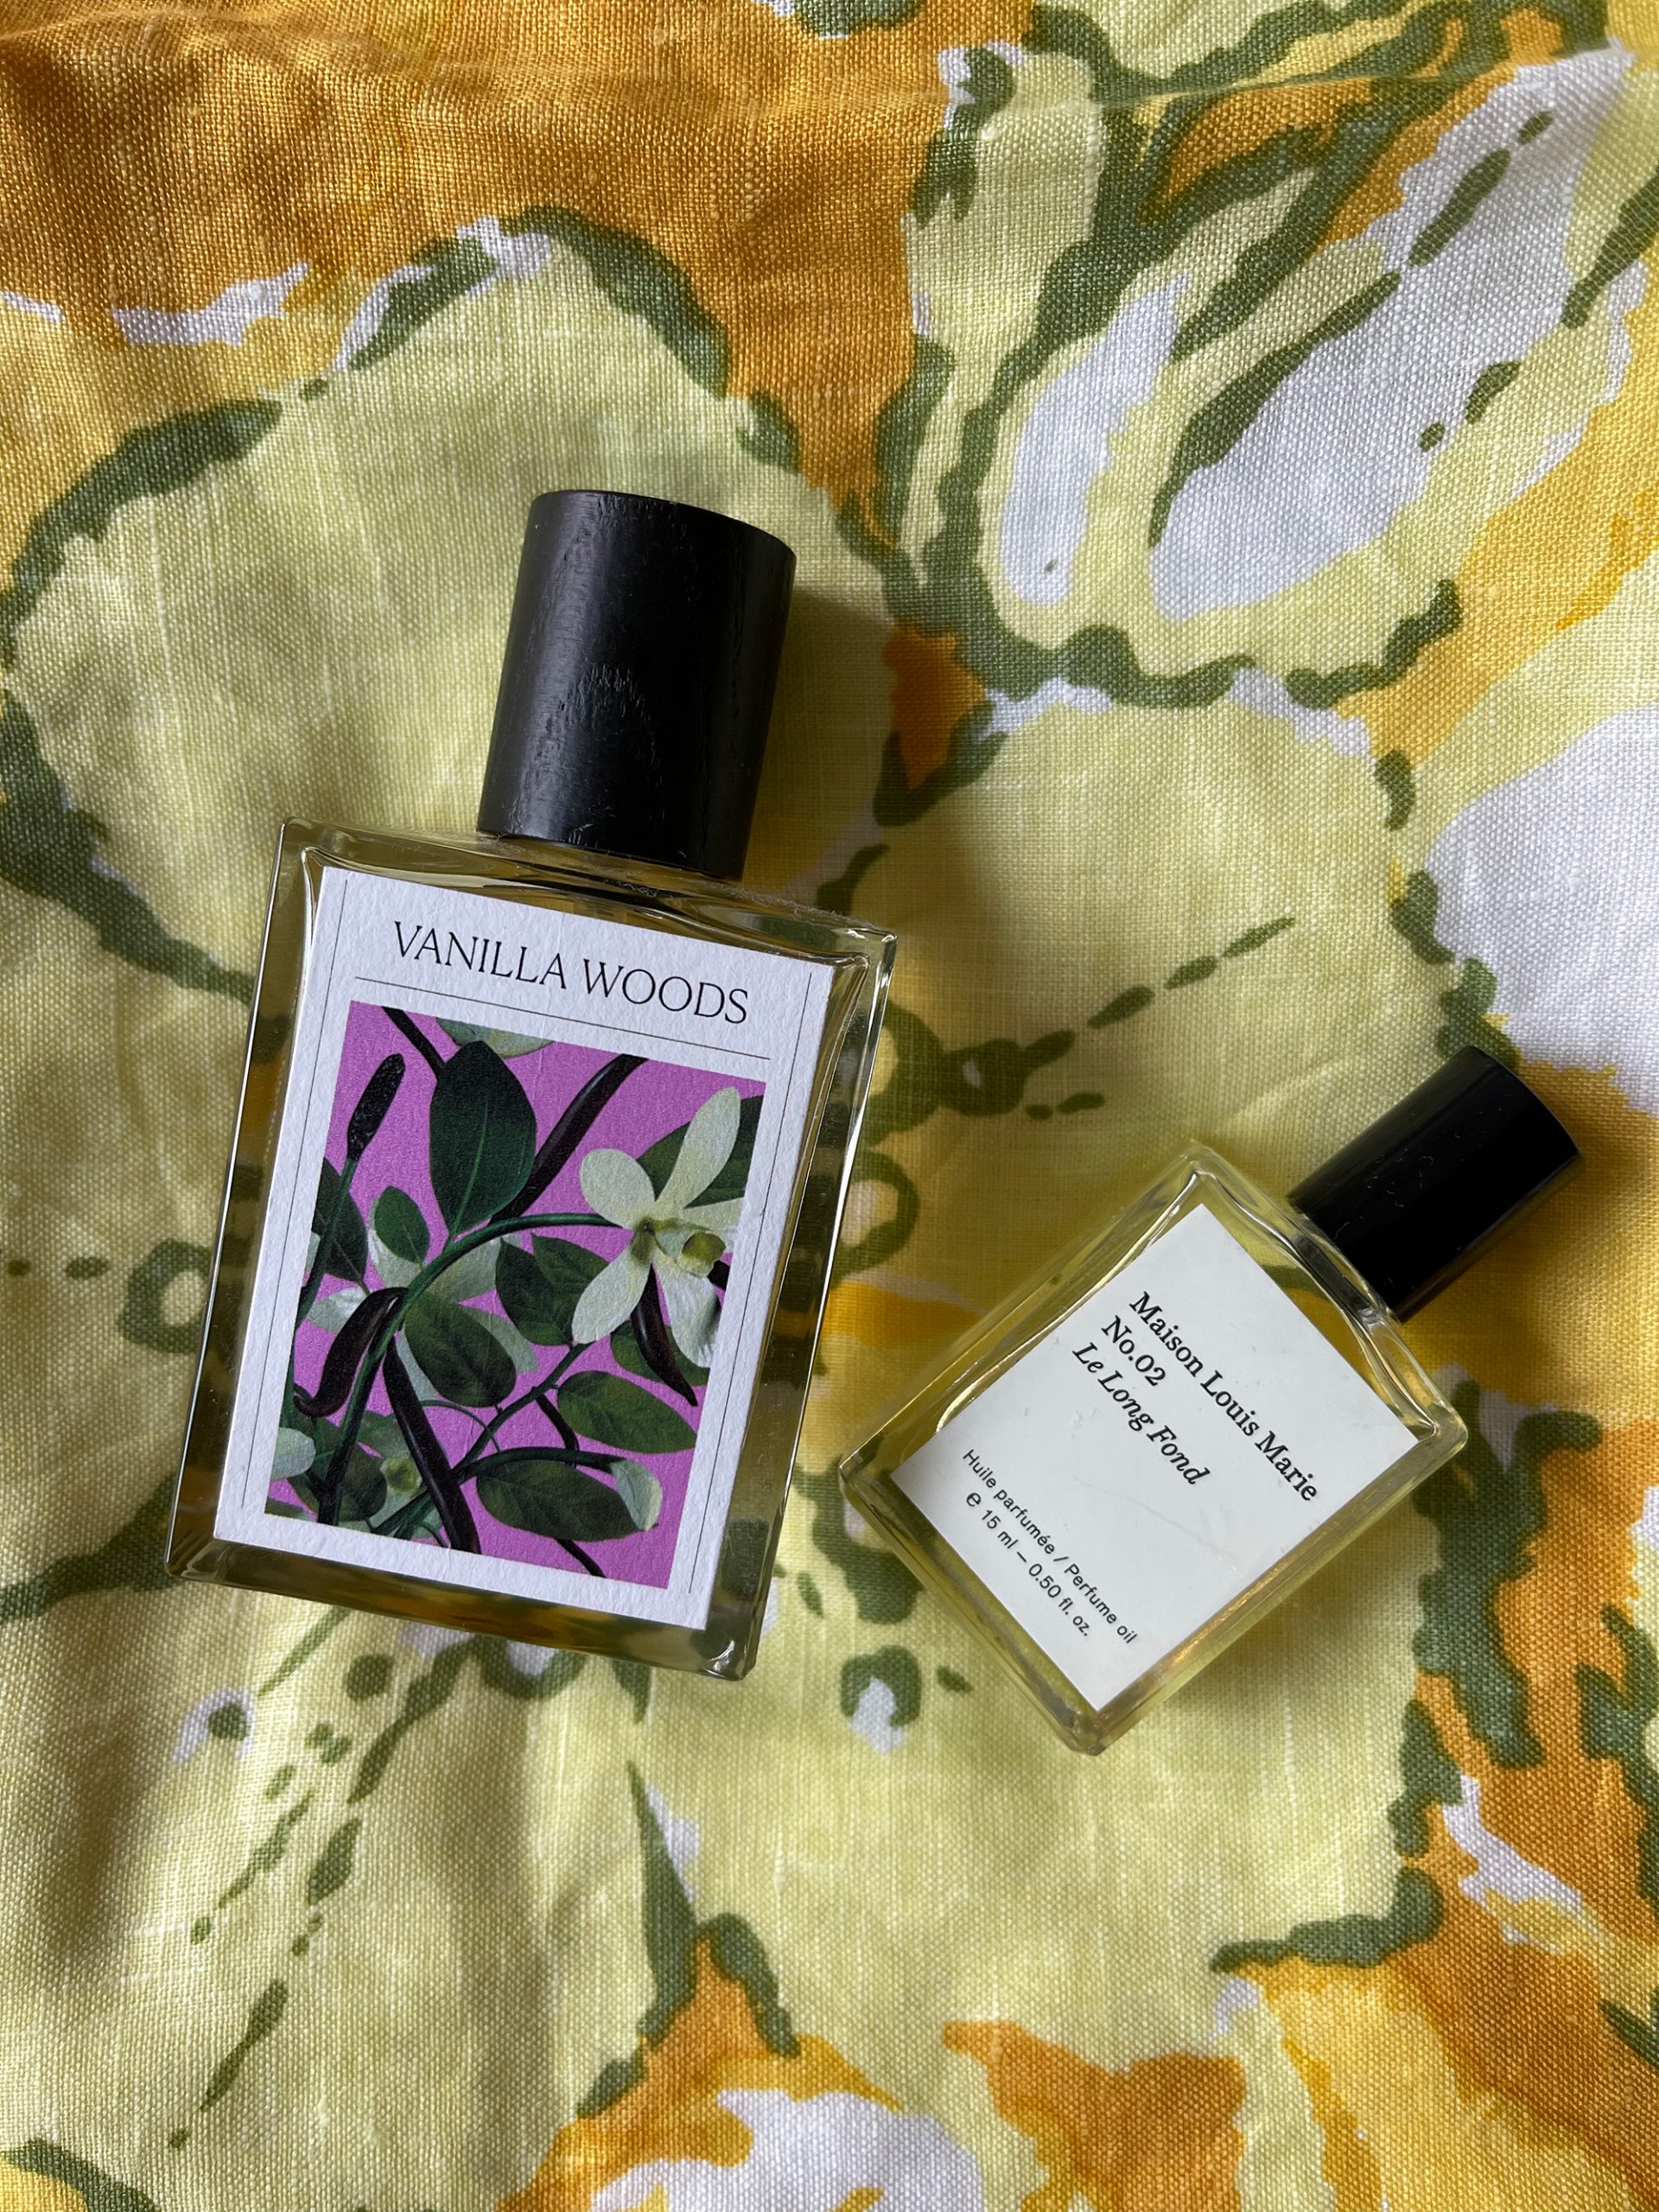 5 Women on Why They Wear Perfume - Lauren Conrad